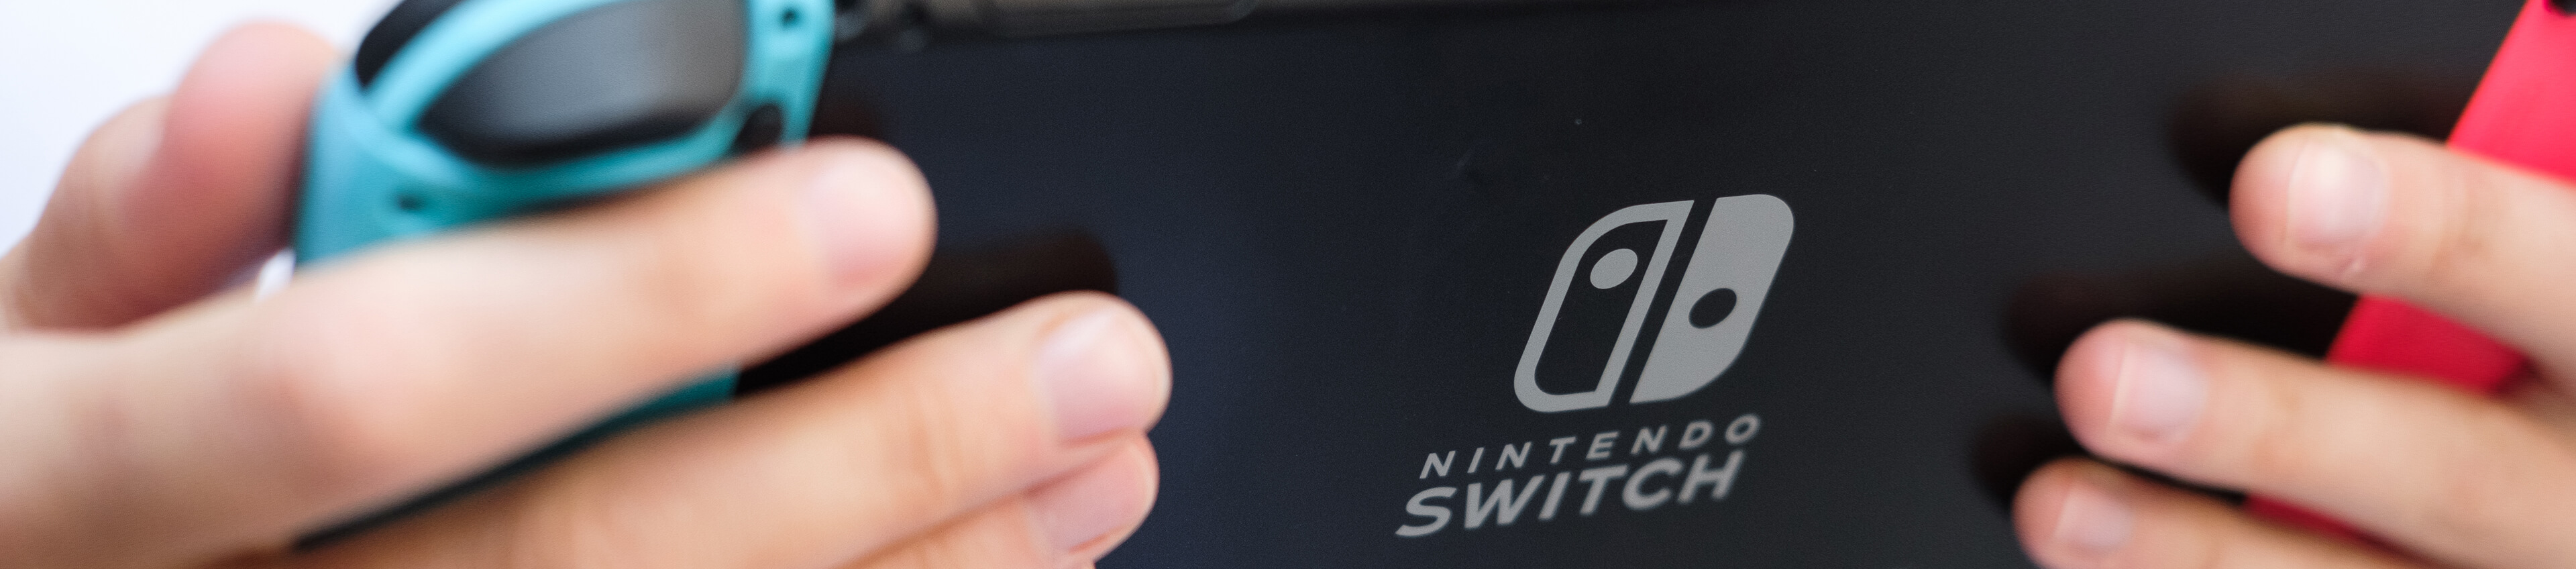 Nintendo Switch Black Friday 2021 deals ⭐ TIP ⭐